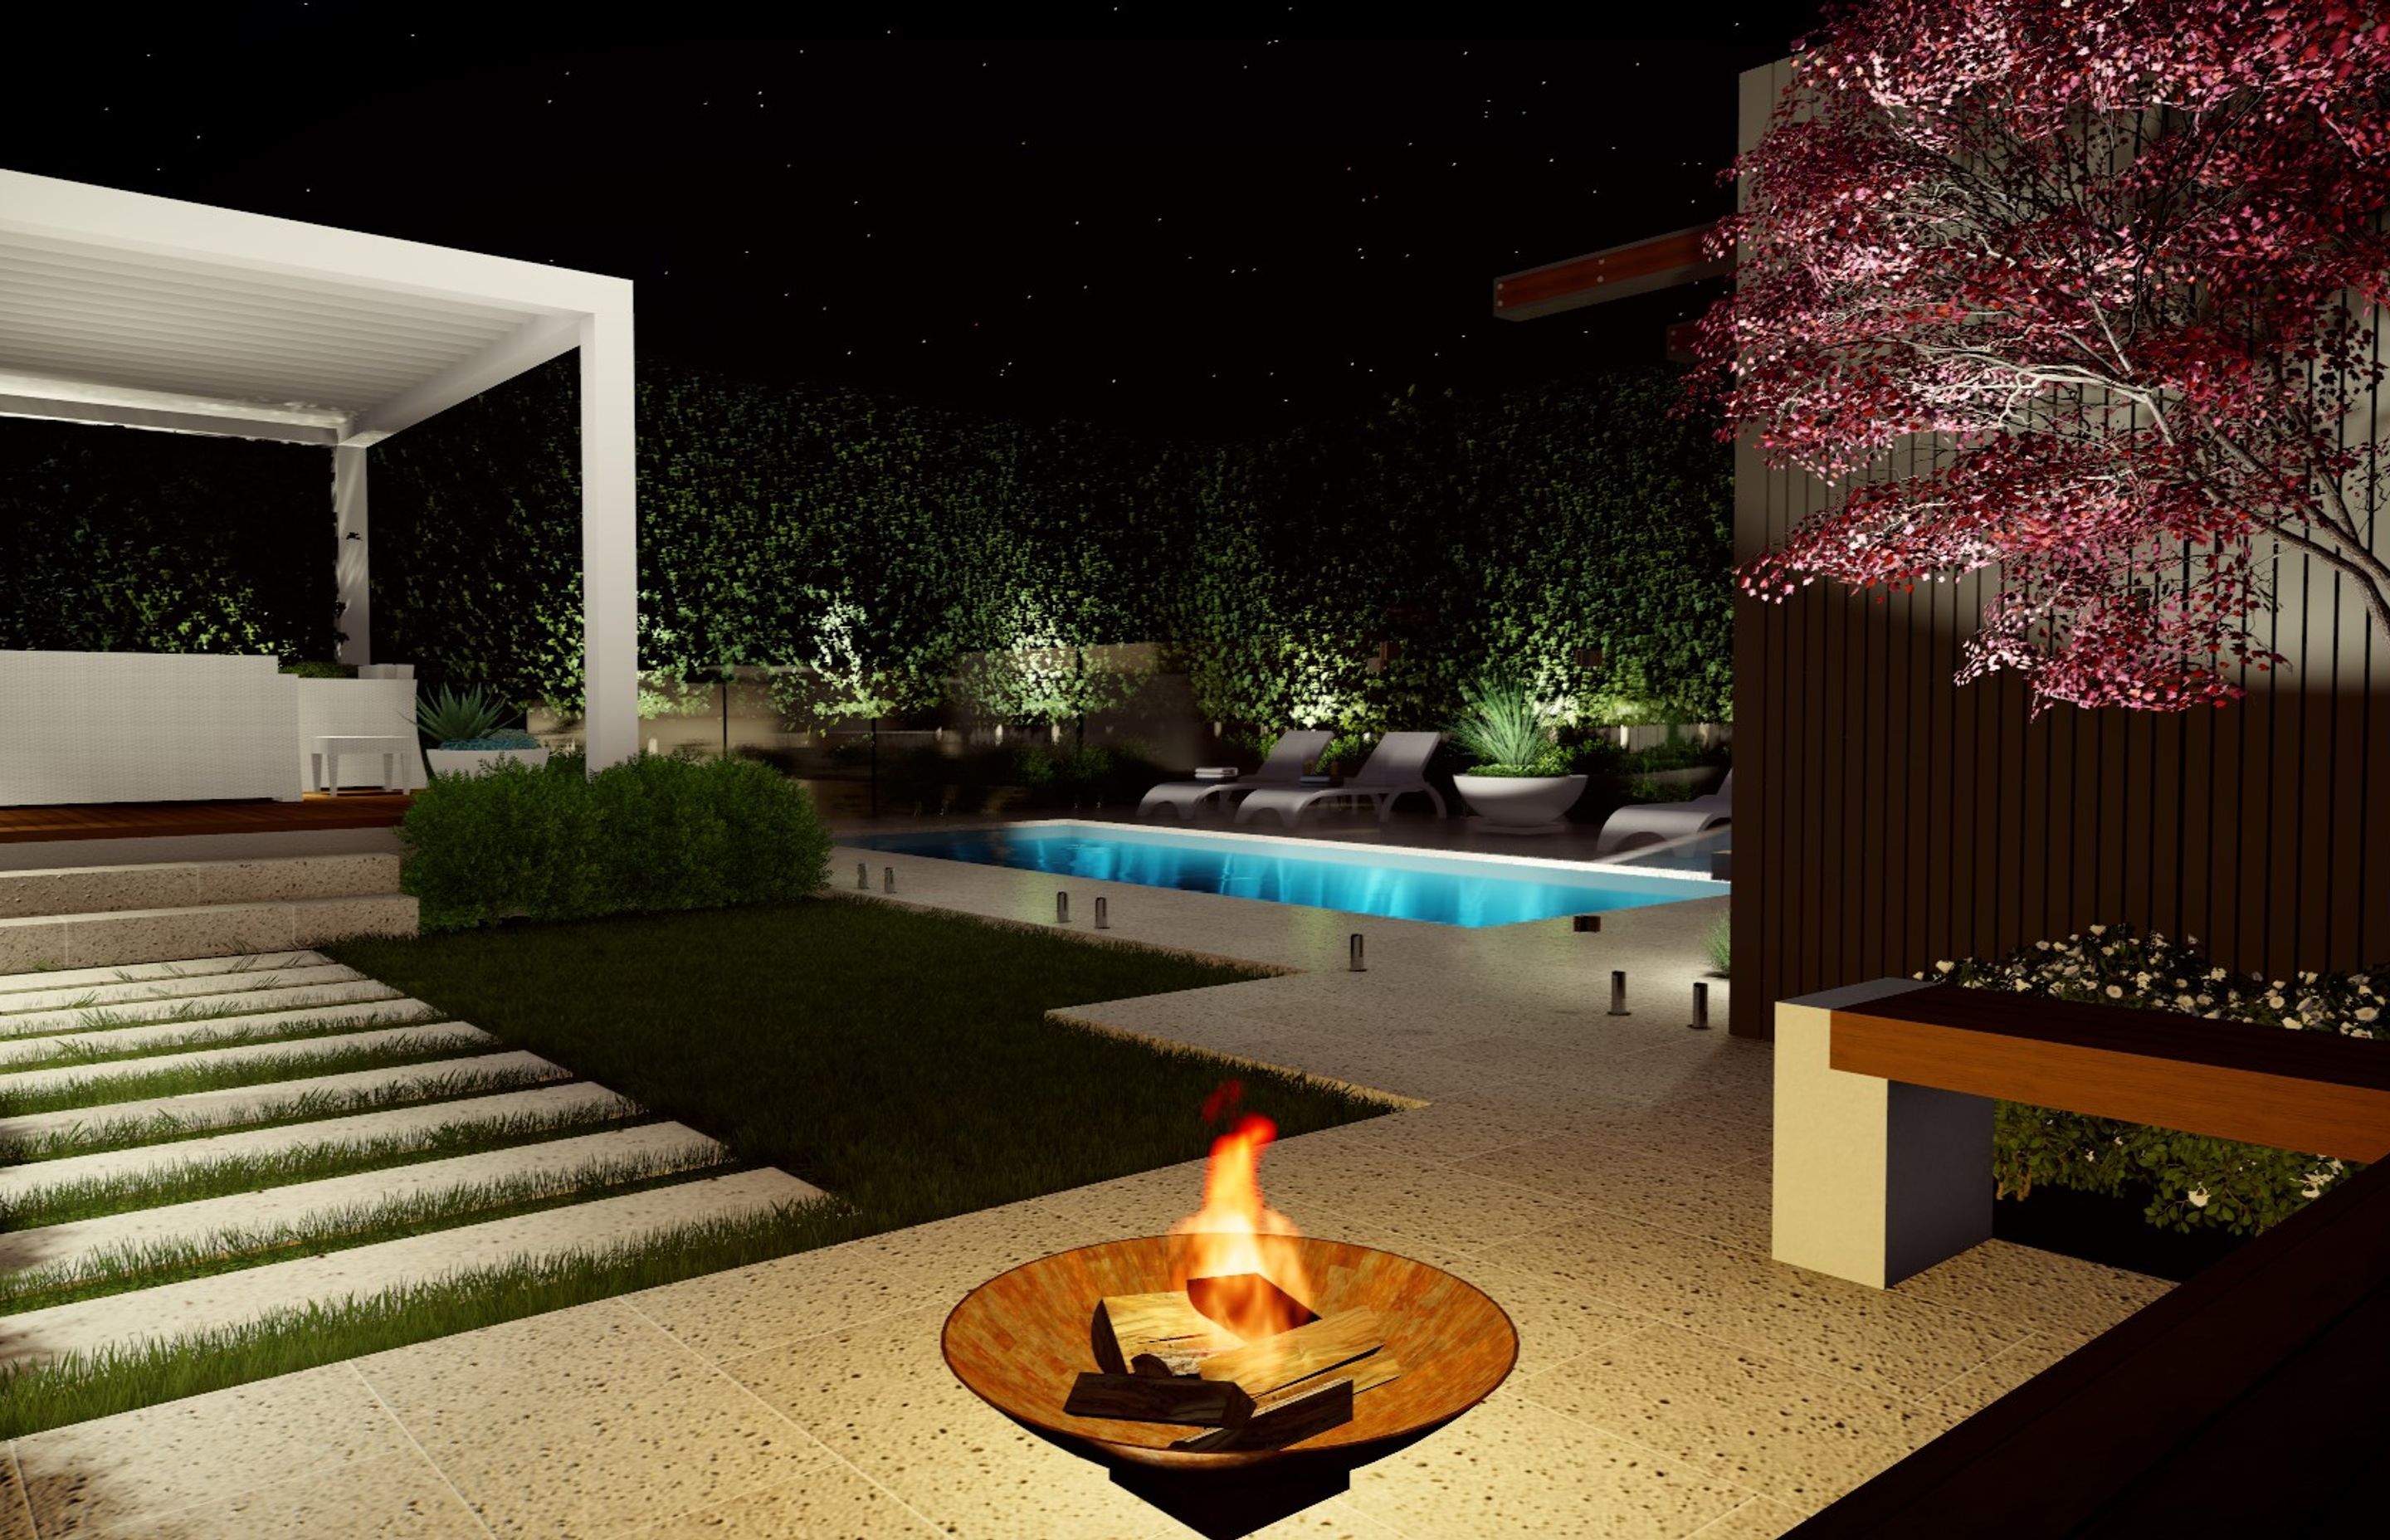 3D Renders: Anthony Scott | Garden and pool design